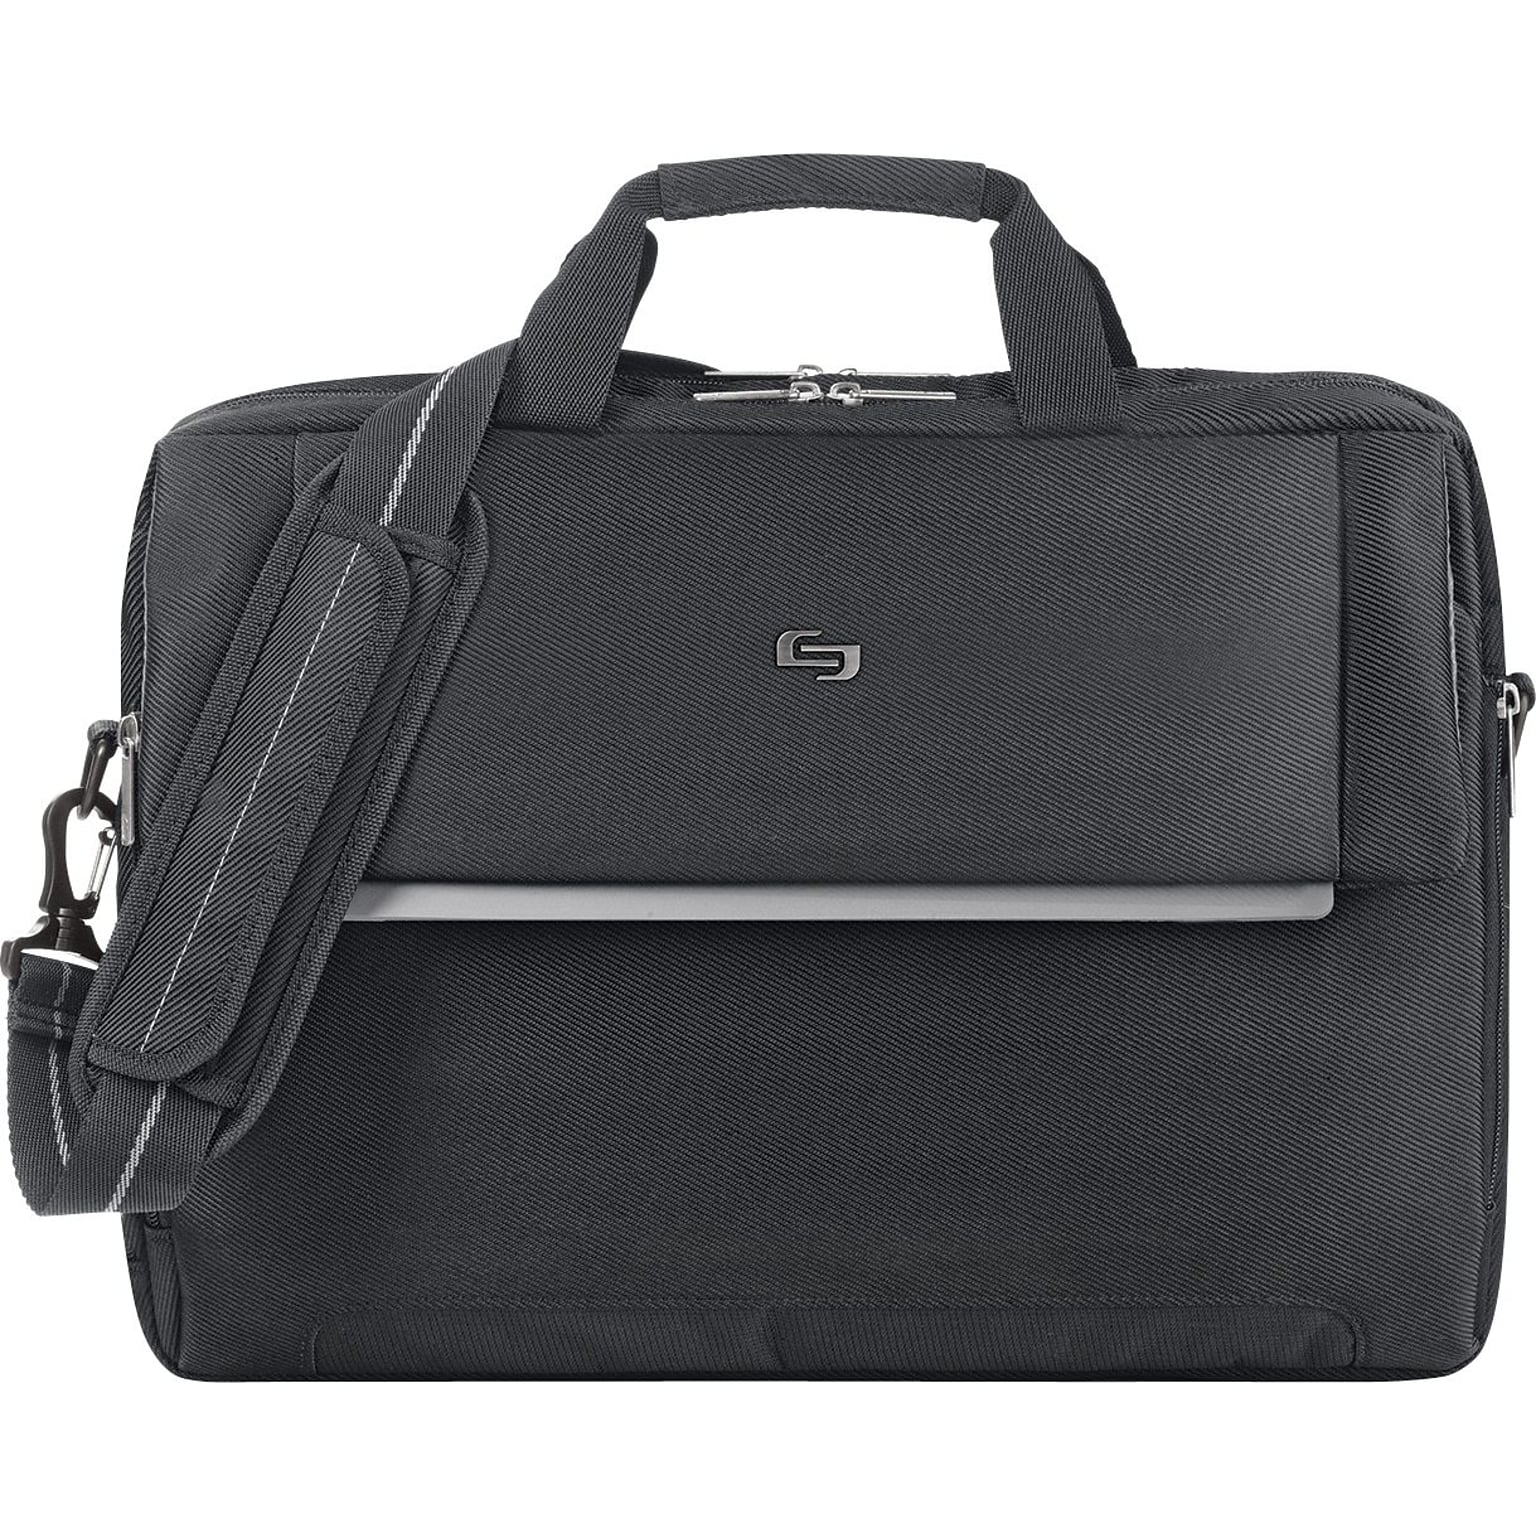 Solo New York Urban Chrysler Polyester Briefcase, Laptop Compatible, Black (LVL330-4)